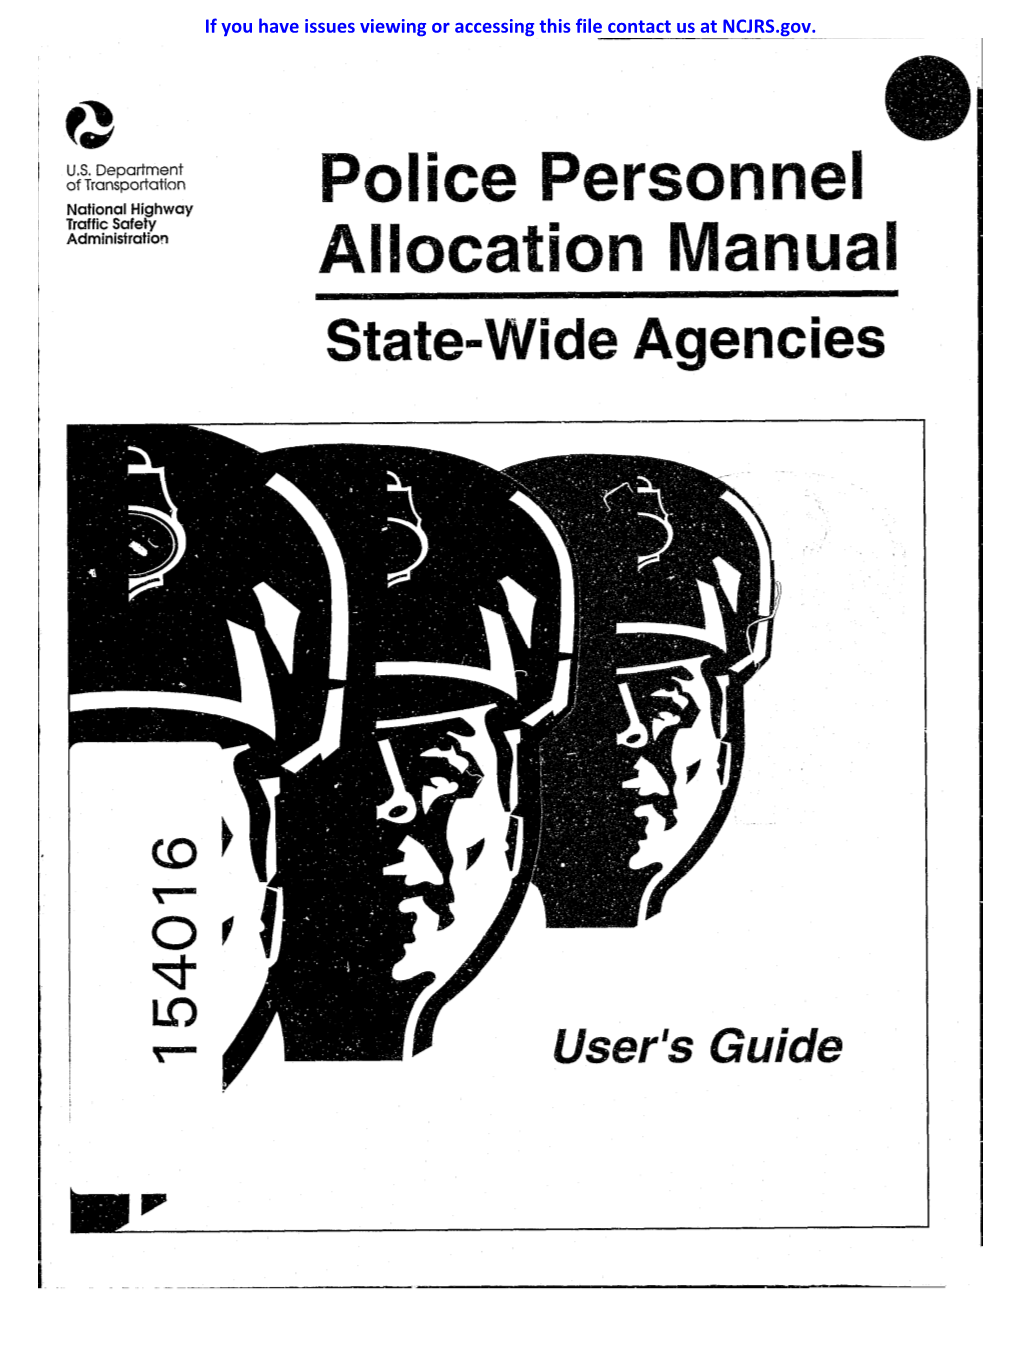 Police Personnel Allocation Manual